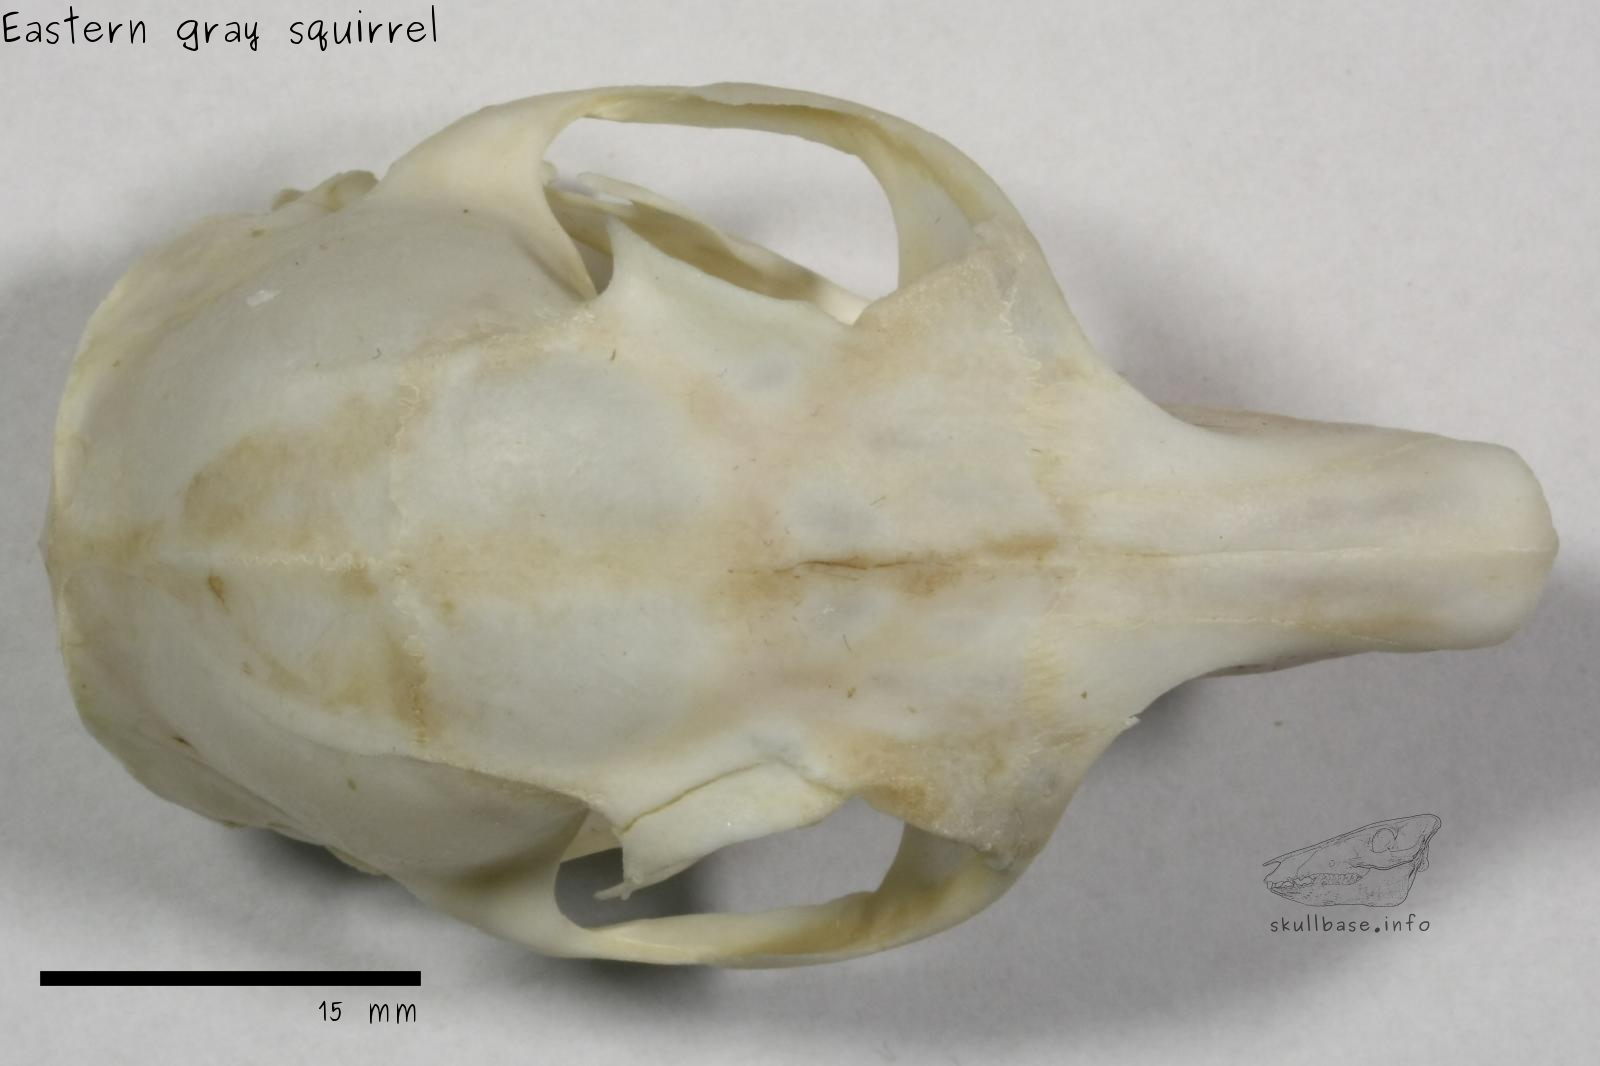 Eastern gray squirrel (Sciurus carolinensis) skull dorsal view